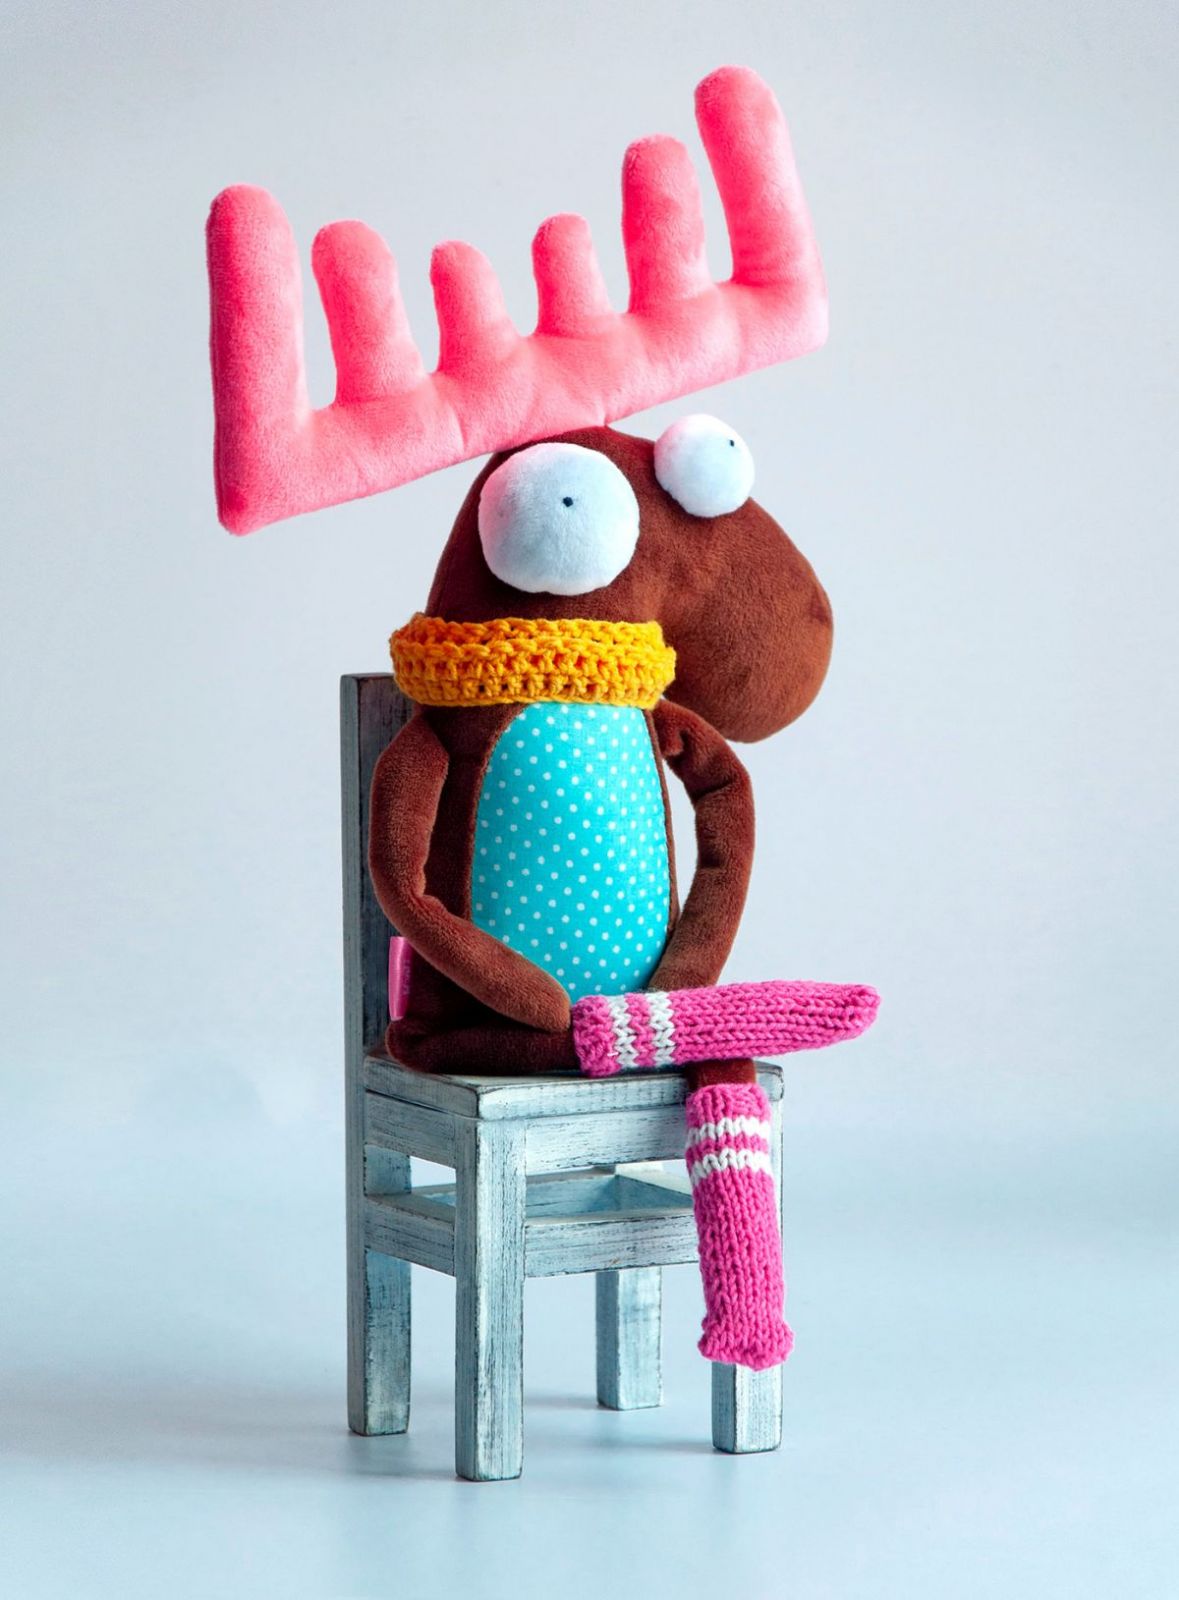 fun toy sculpture reindeer by lidiya marinchuk